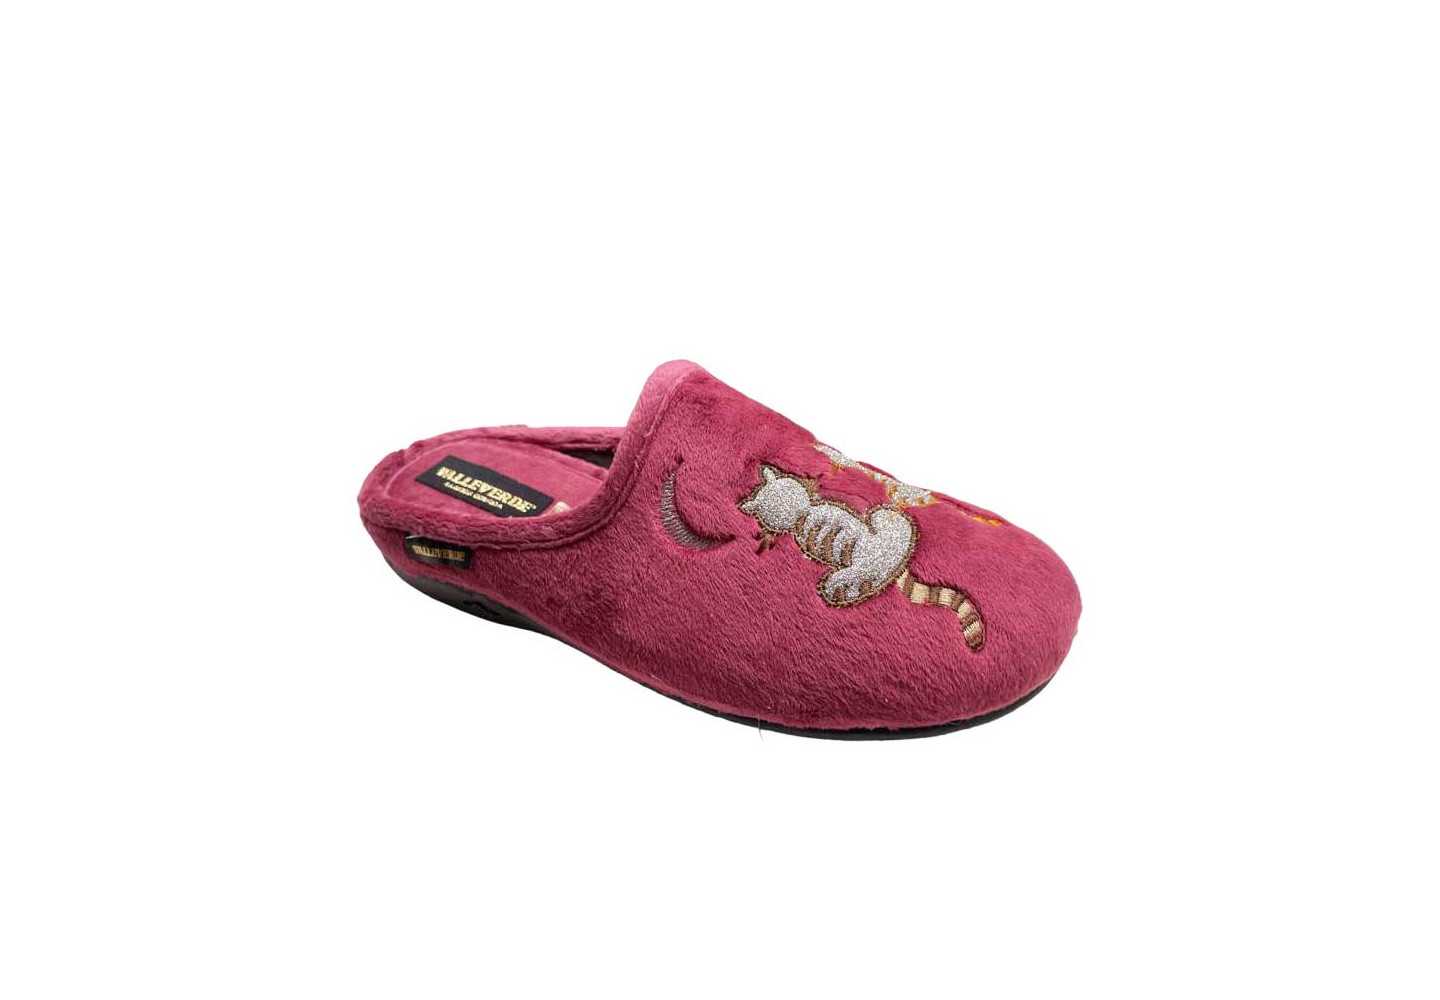 Pantofola da donna Valleverde con glitter 26129